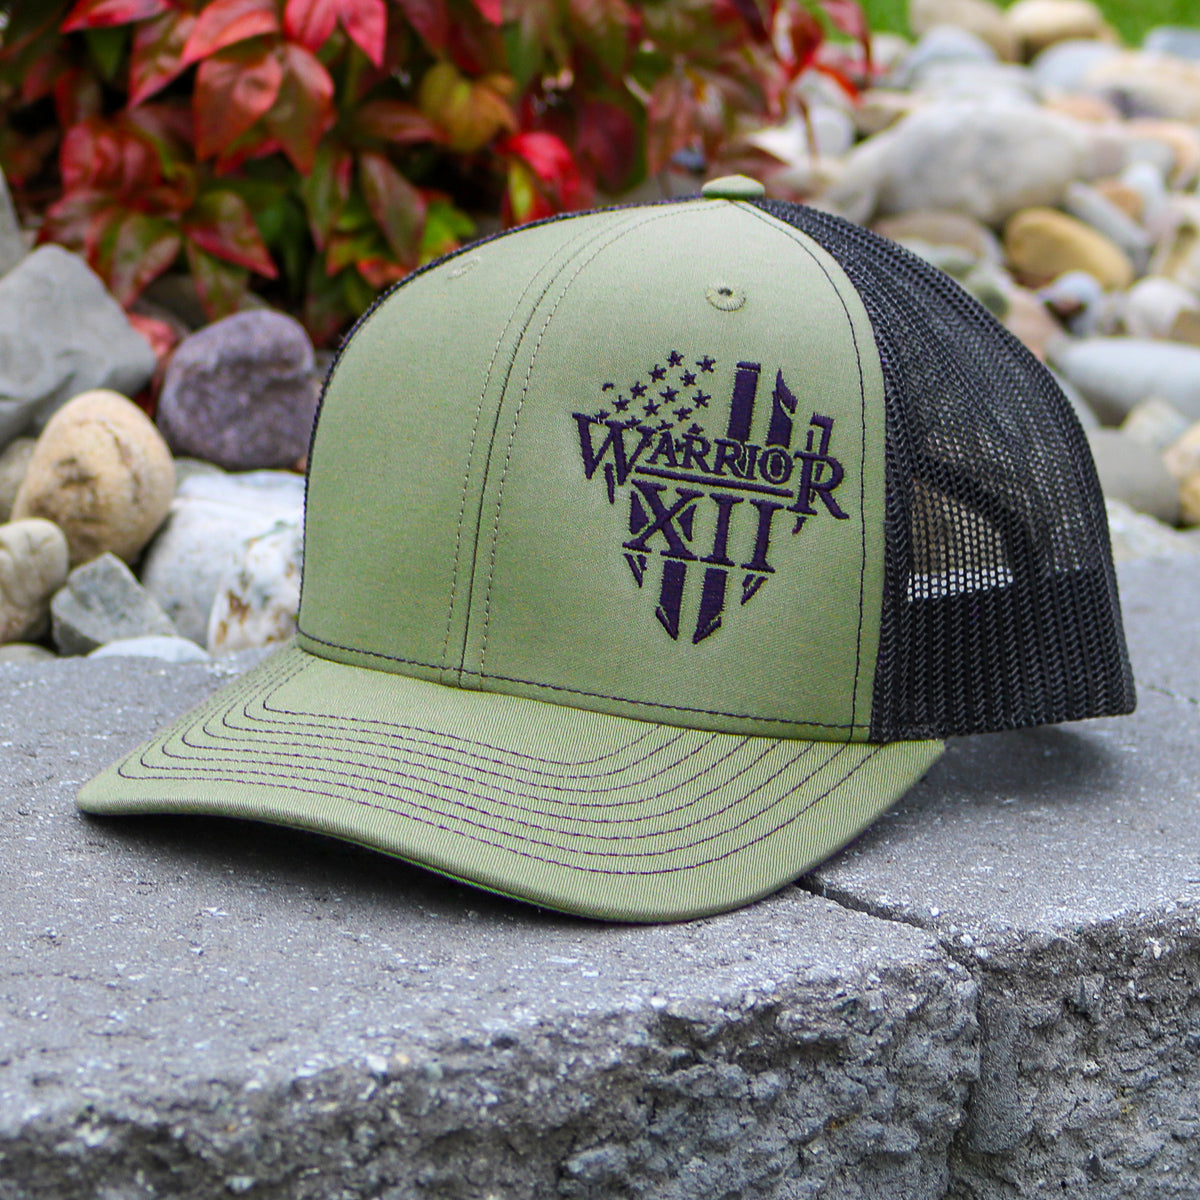 The Warrior Snapback Hat OD Green/Black